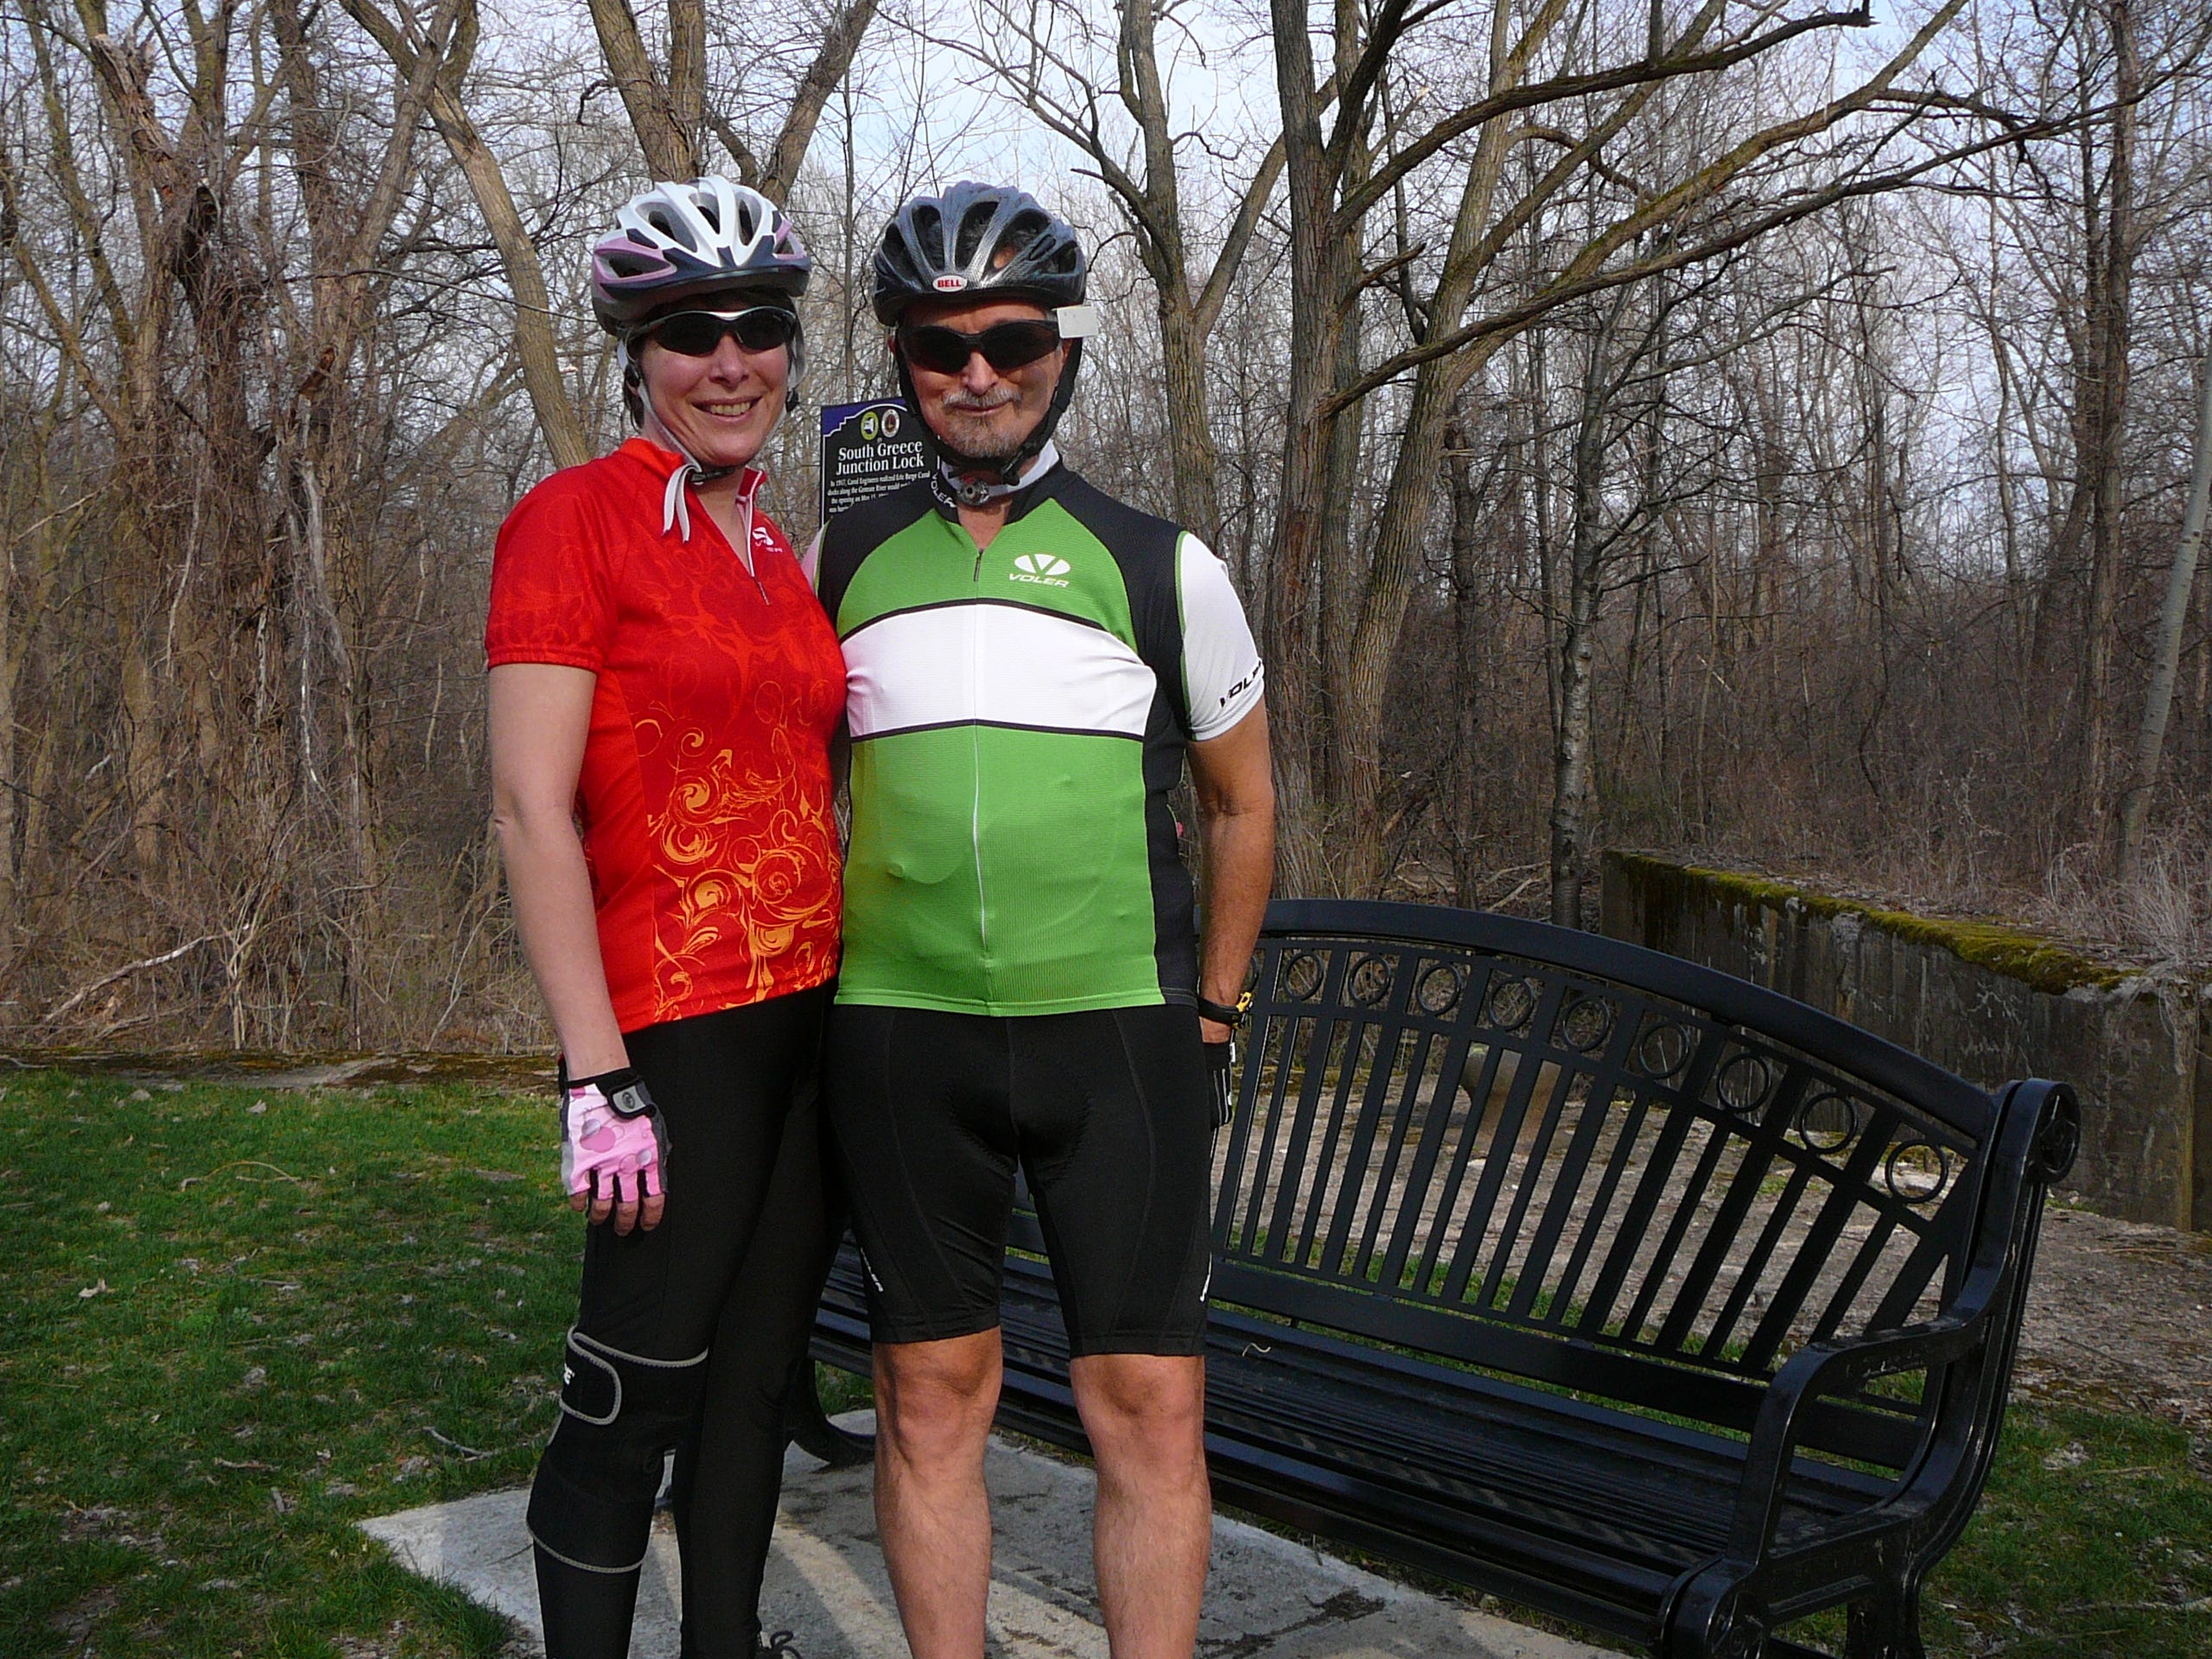 Biking through hardship kept Spencerport couple going